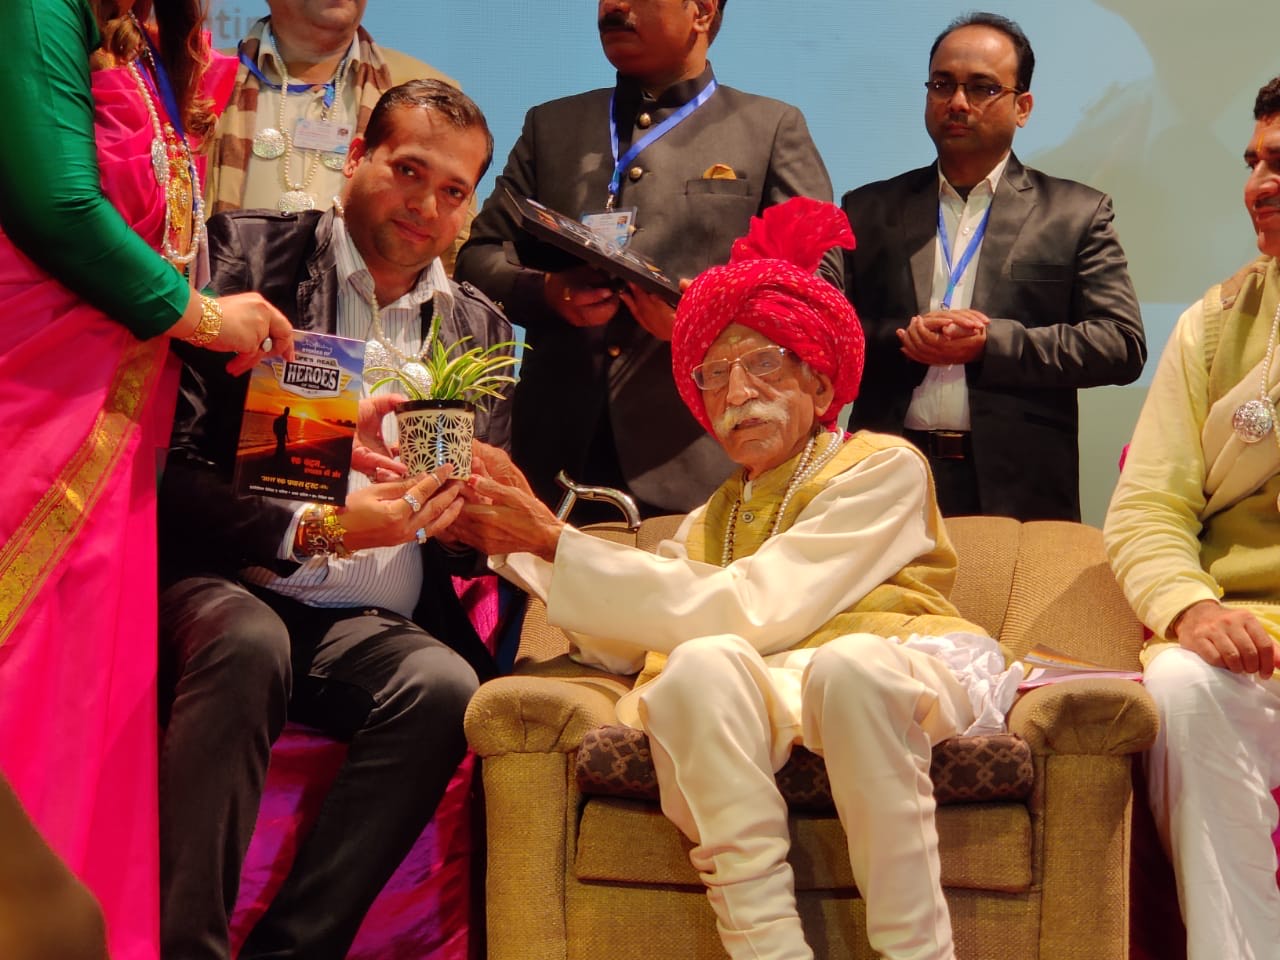 Ajay Harinath Singh, Darwin Platform: A Genius, a Great Indian Entrepreneur